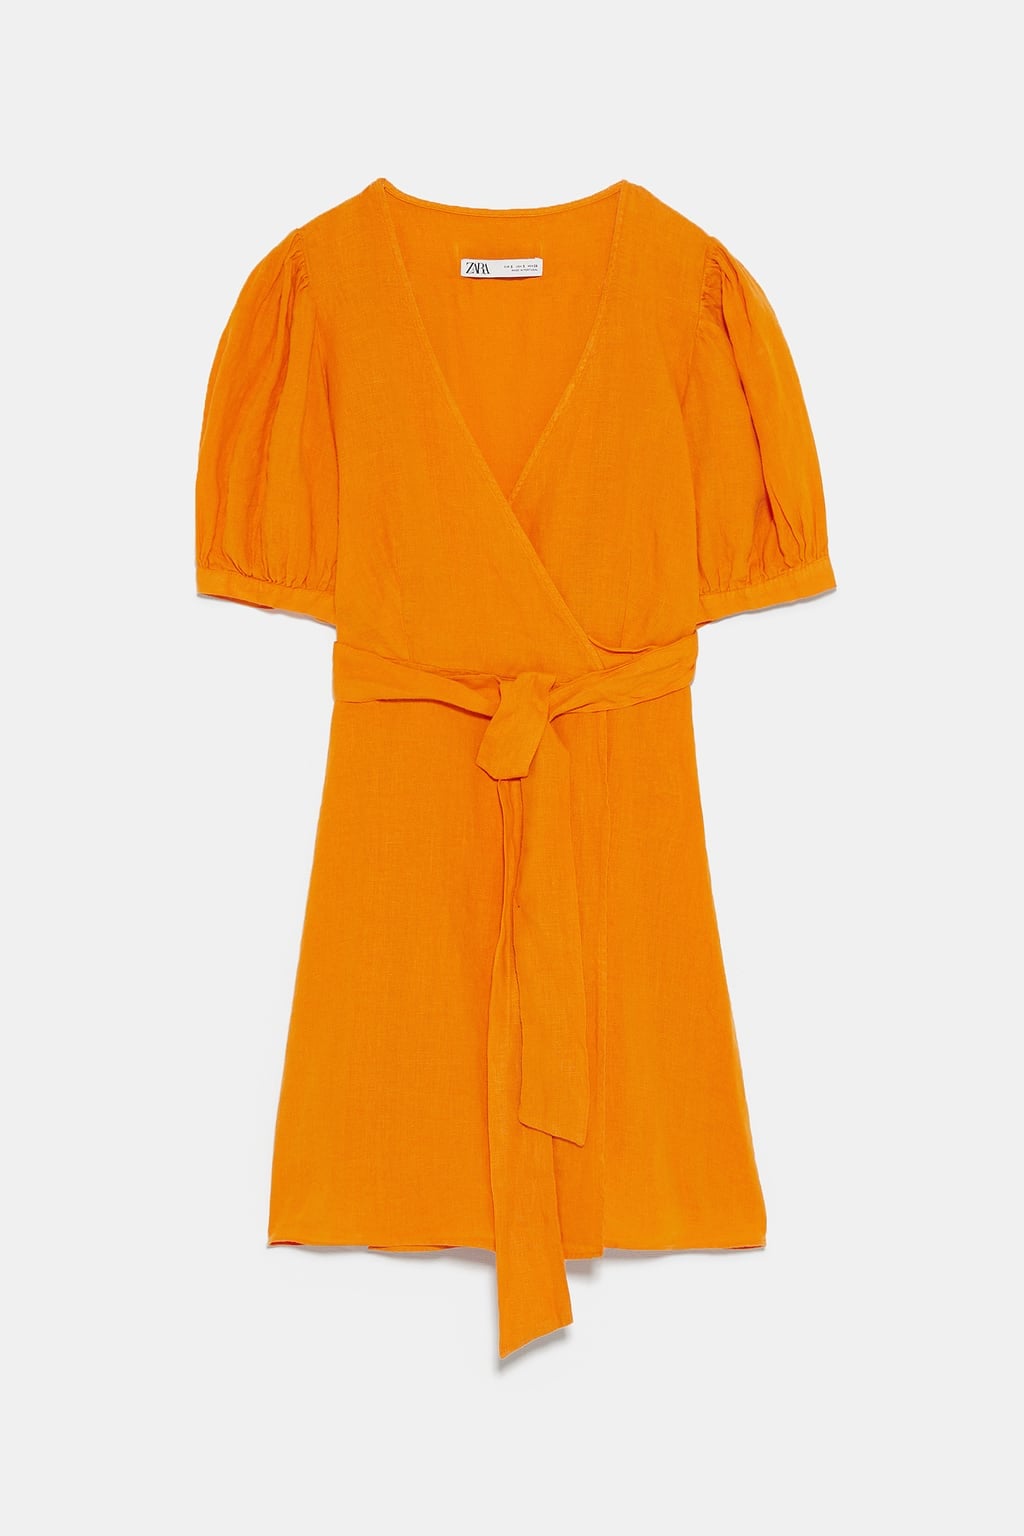 zara orange linen dress